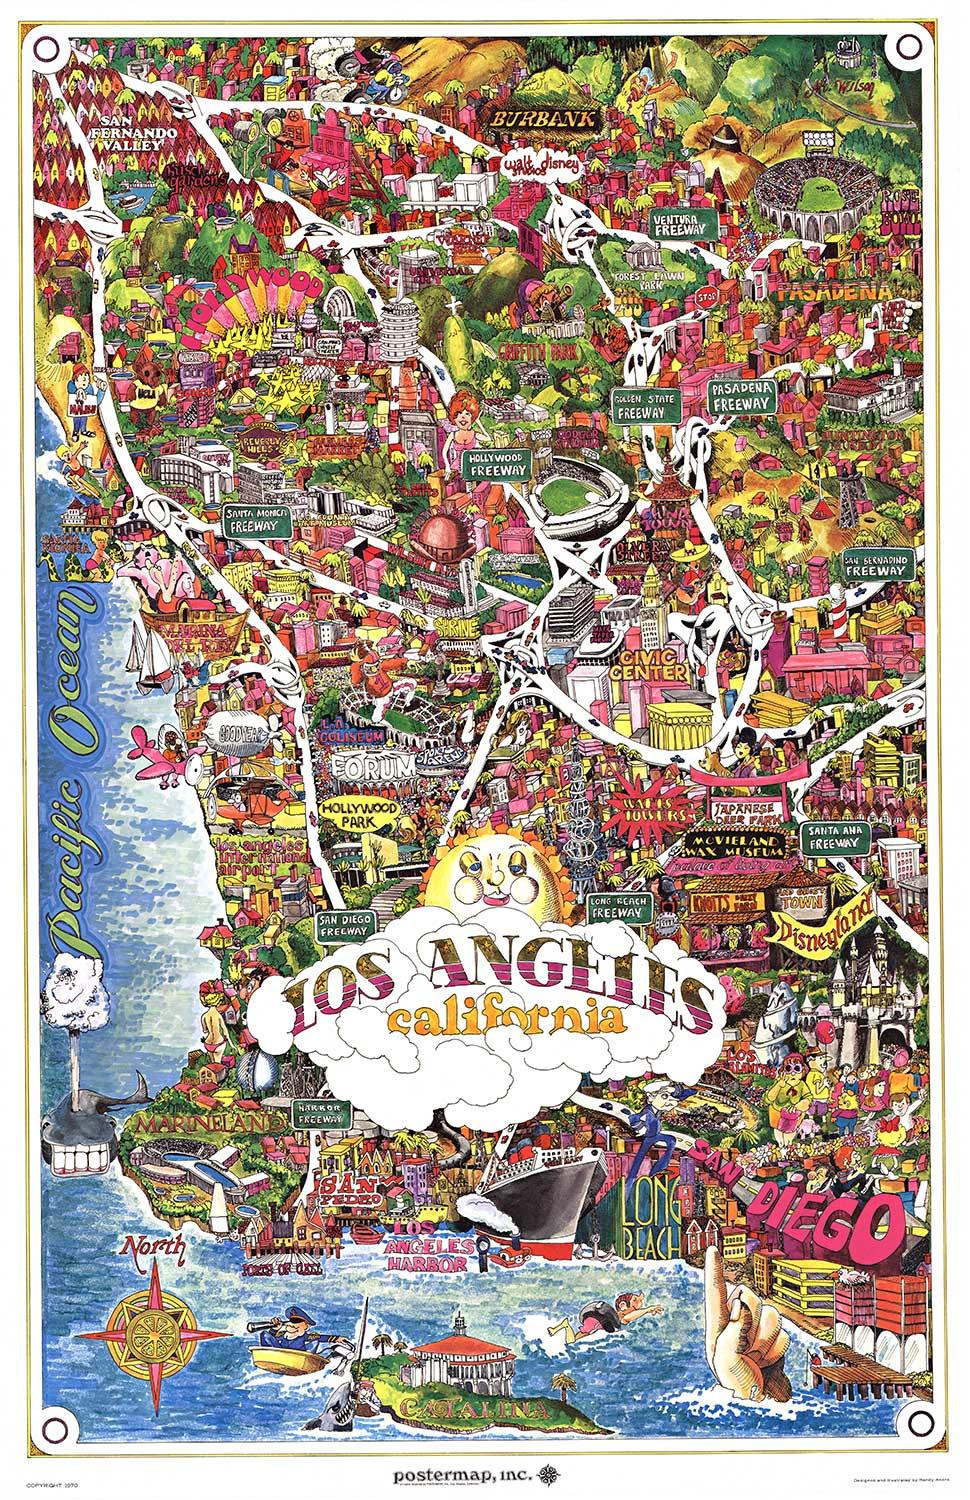 1920s Los Angeles & Vicinity California Vintage Travel Advertisement Art Poster 